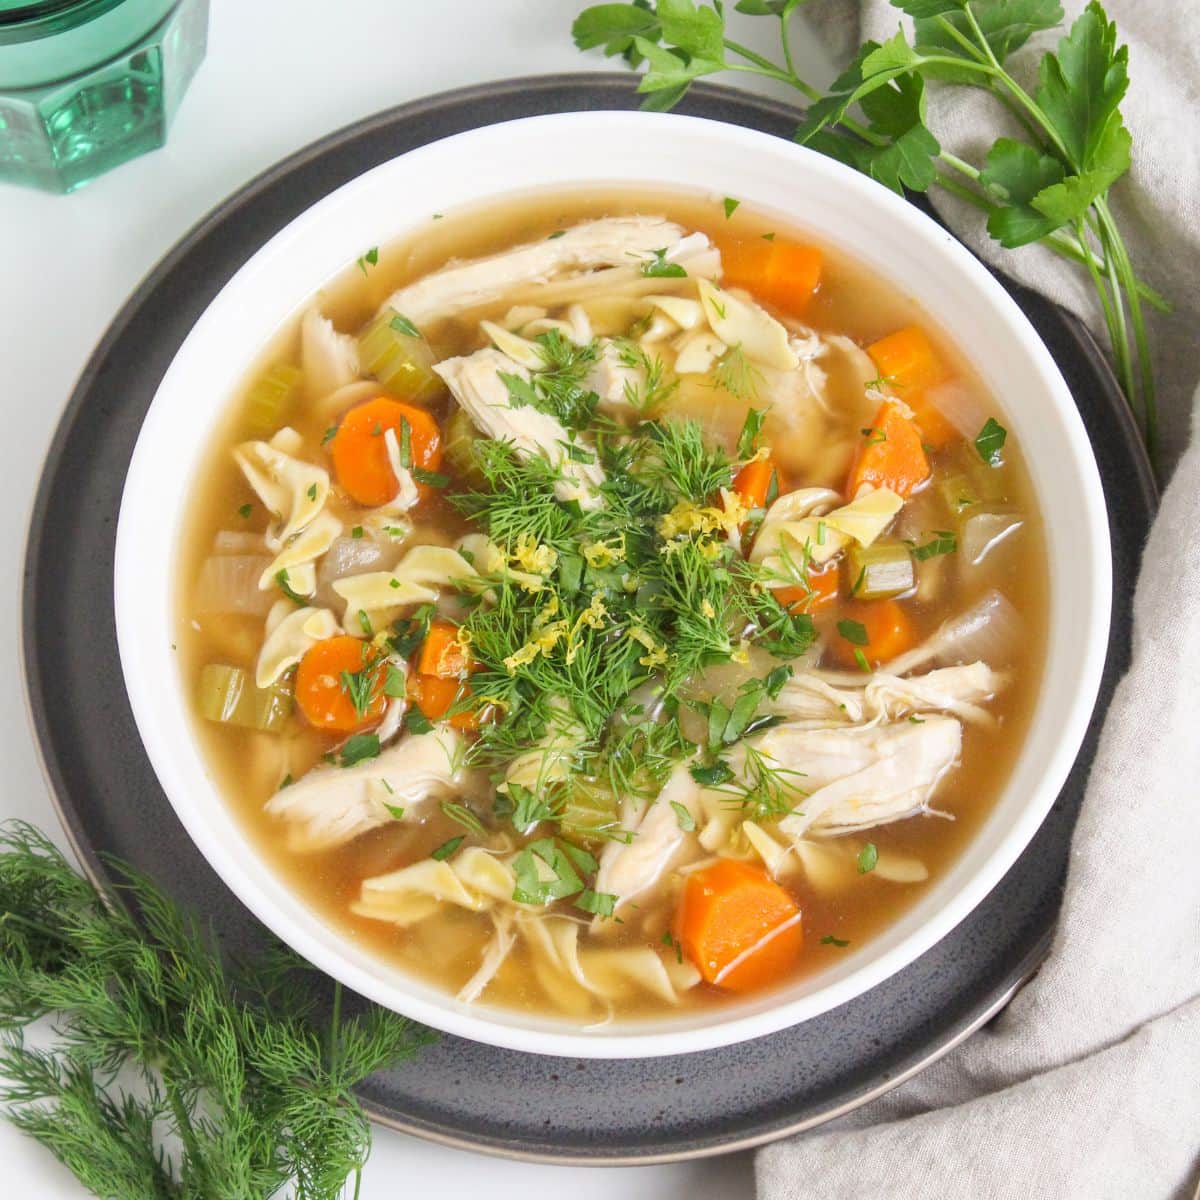 https://www.fannetasticfood.com/wp-content/uploads/2023/03/Crockpot-Chicken-Noodle-Soup-featured-image.jpg